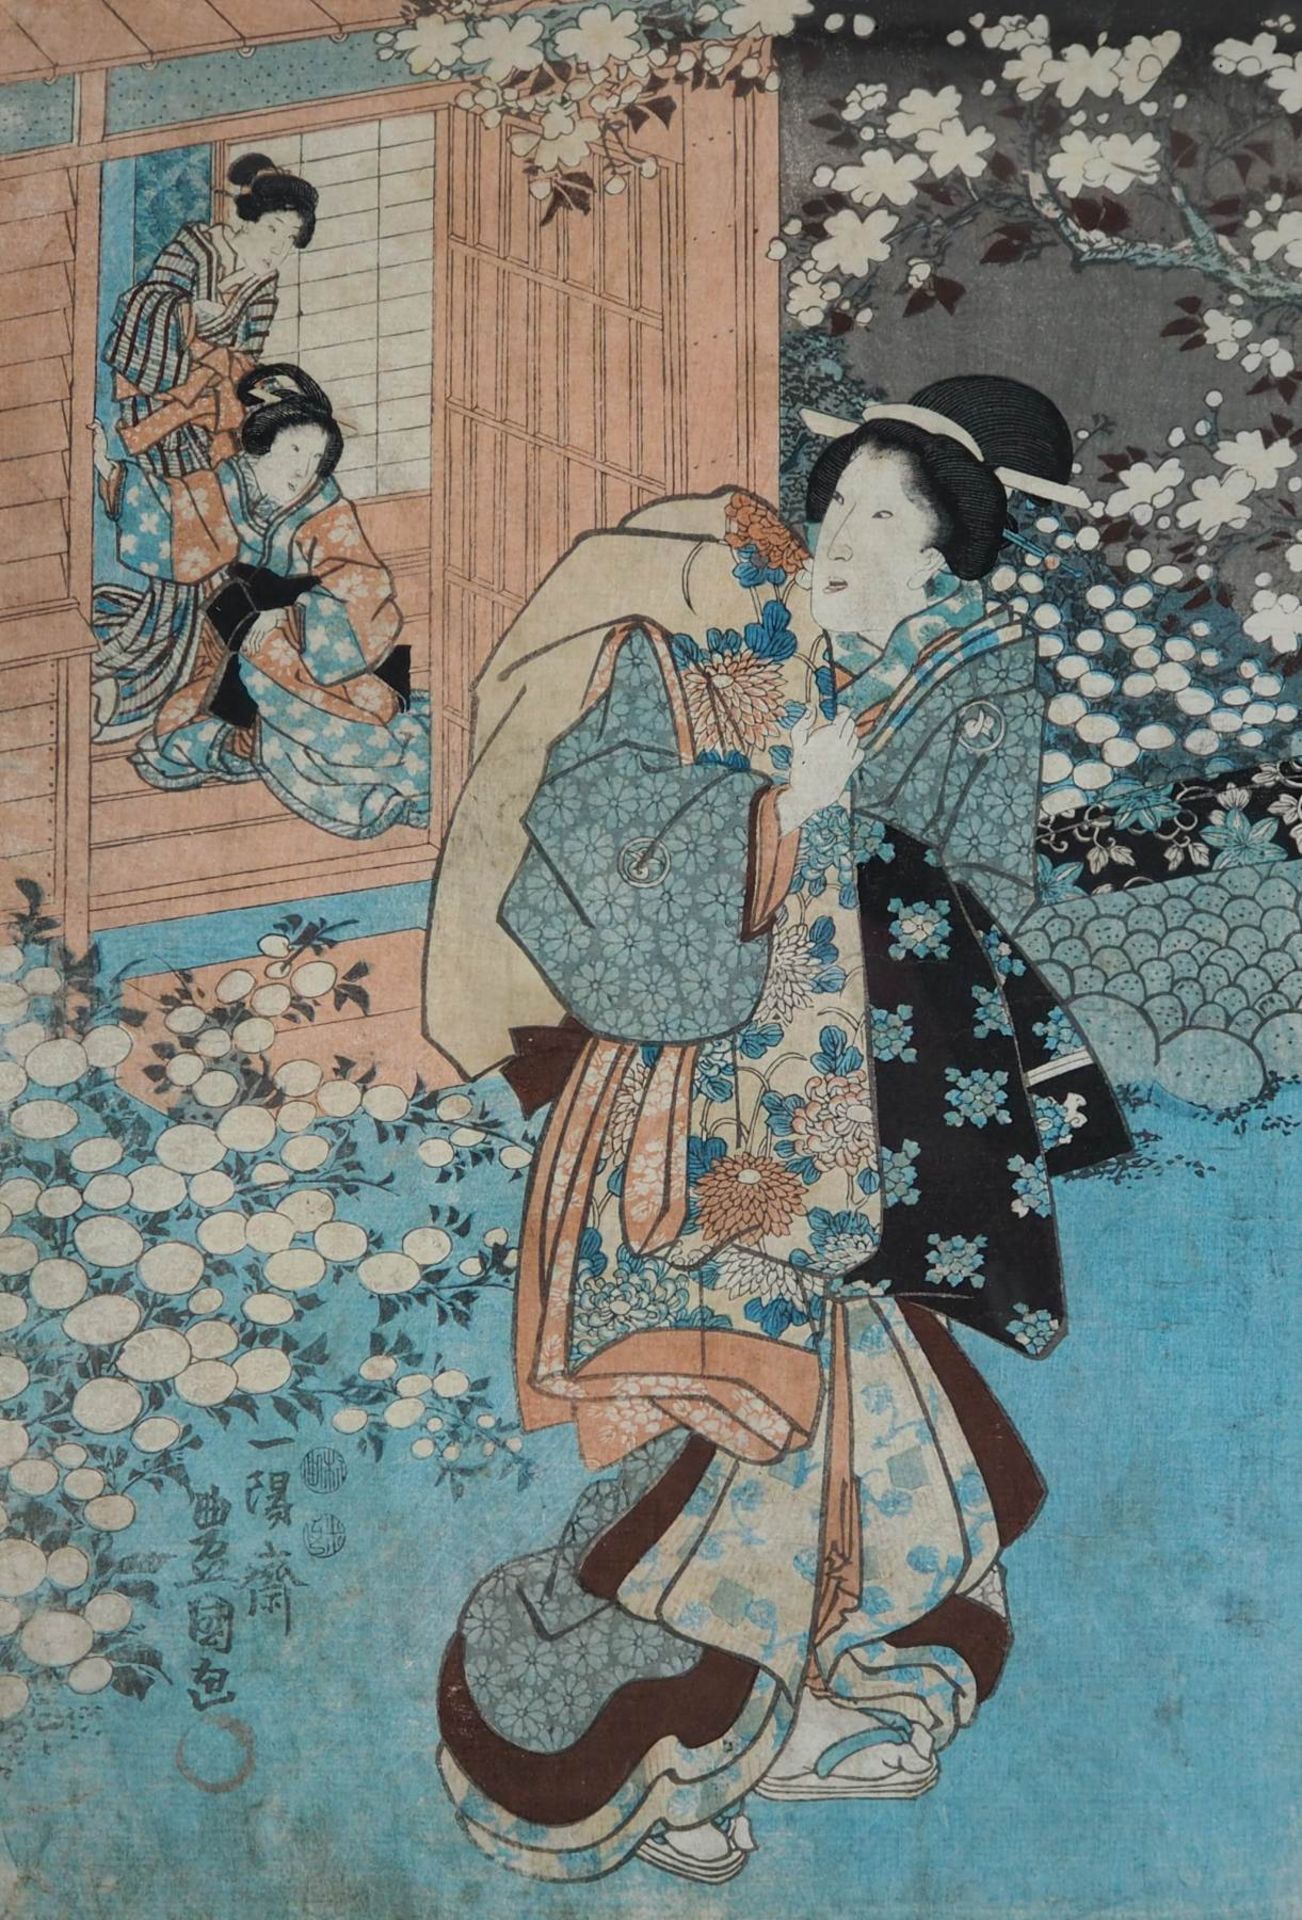 KUNISADA, Utagawa/ UTAGAWA TOYOKUNI III./ GOTOTEI KUNISADA (*1786 Honjo +1865 Edo),